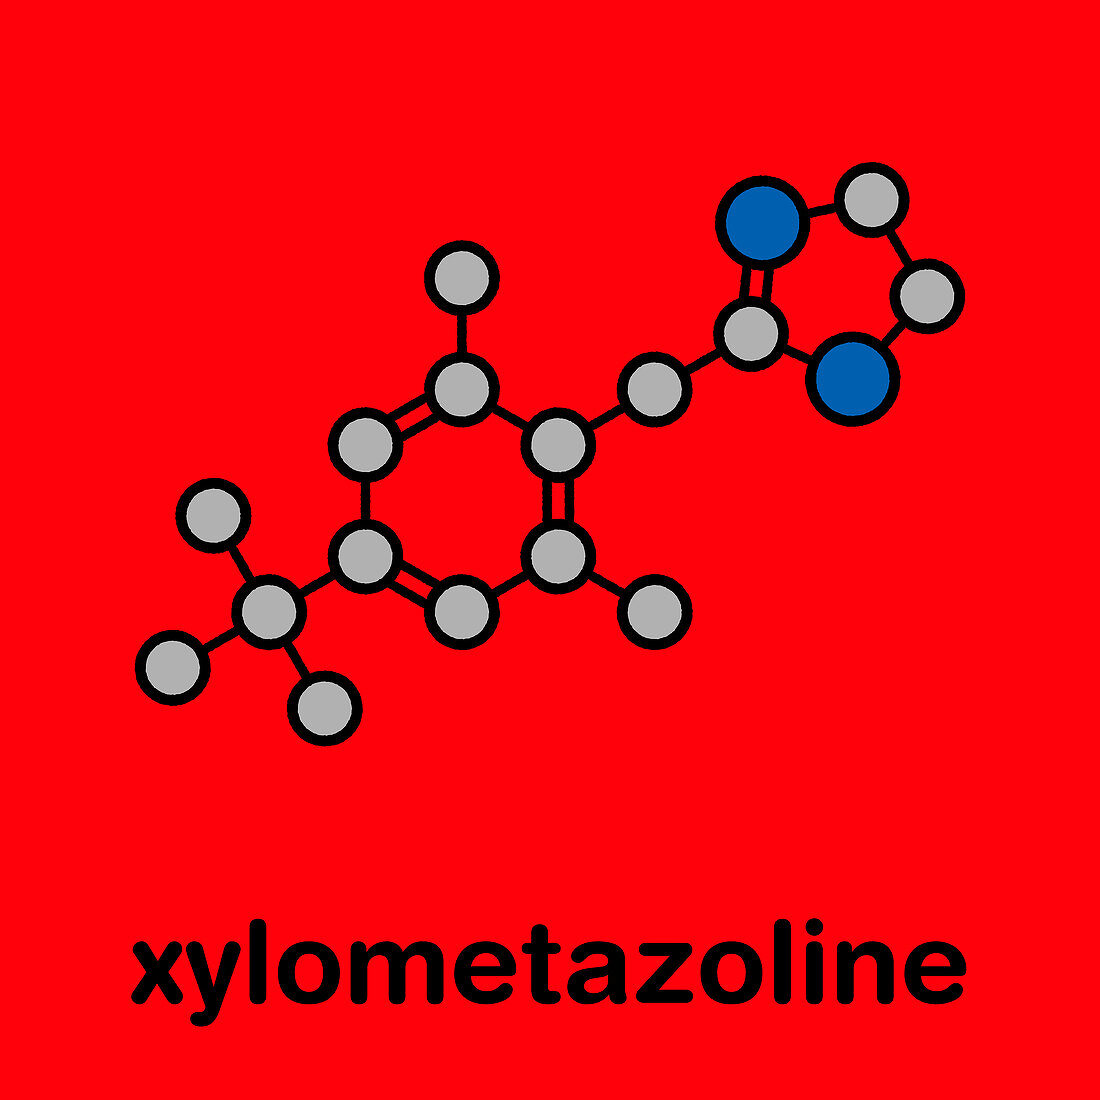 Xylometazoline nasal decongestant, molecular model